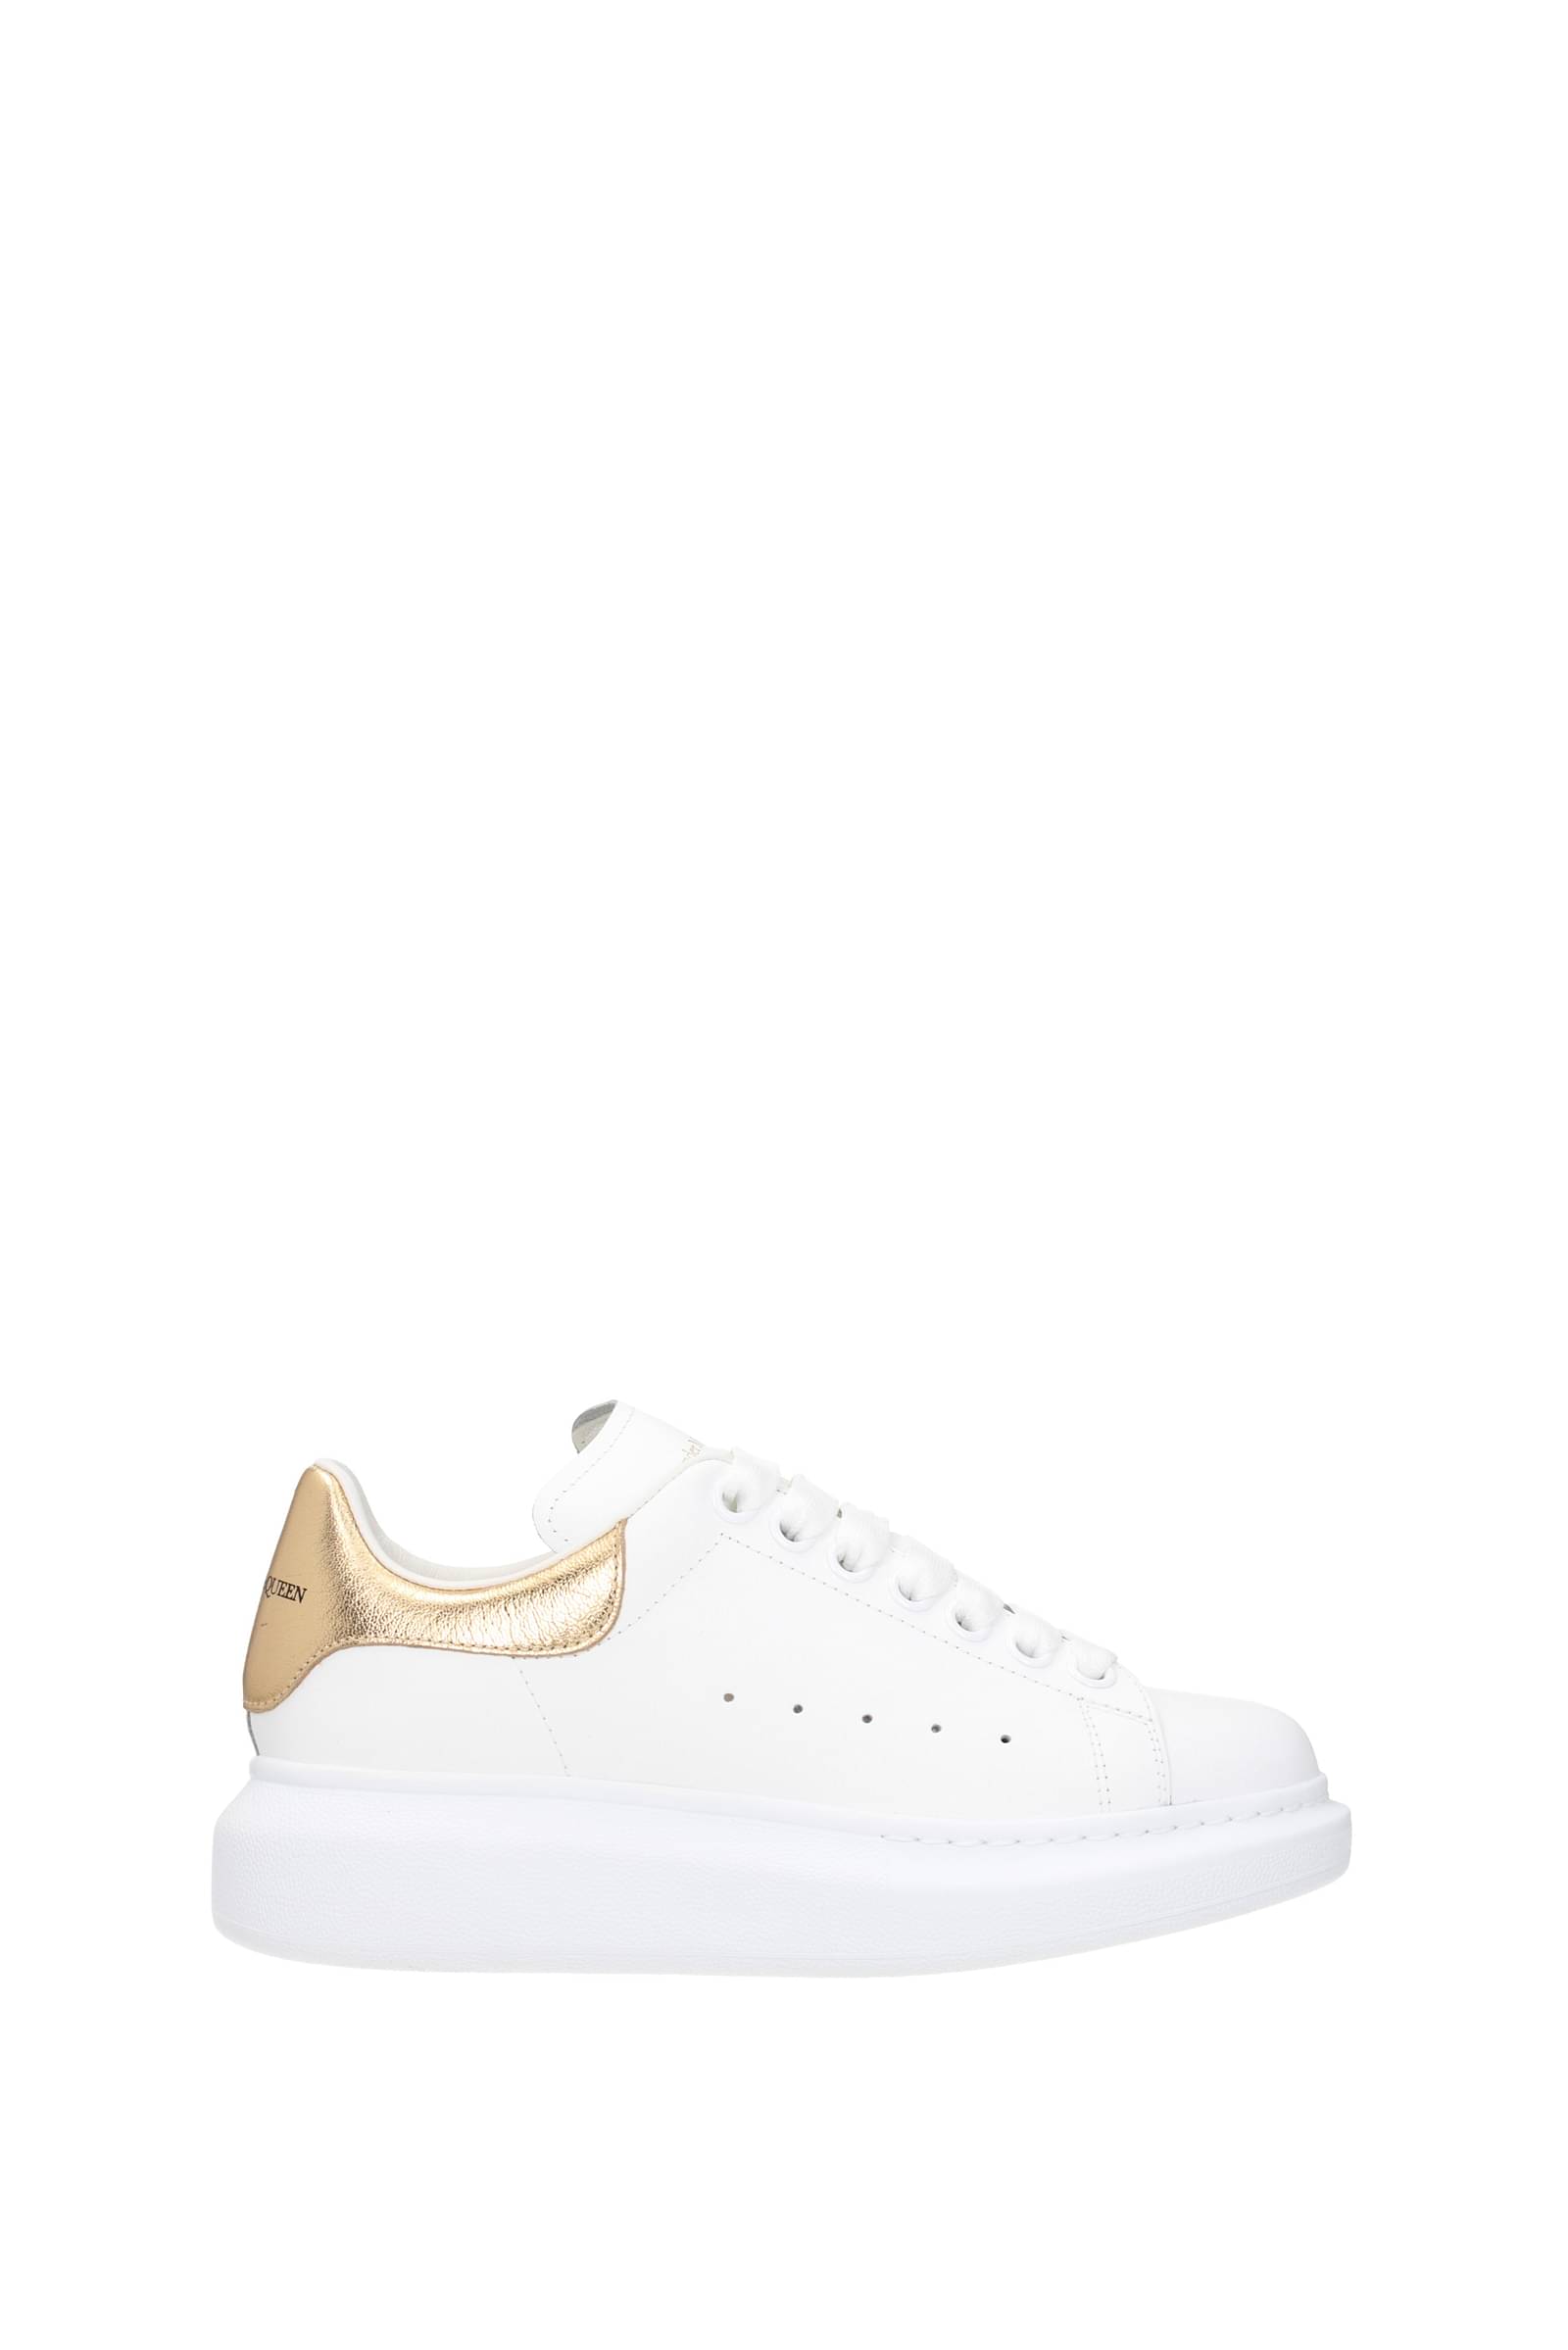 Oversized Sneaker in White/Rose Gold | Alexander McQueen AU